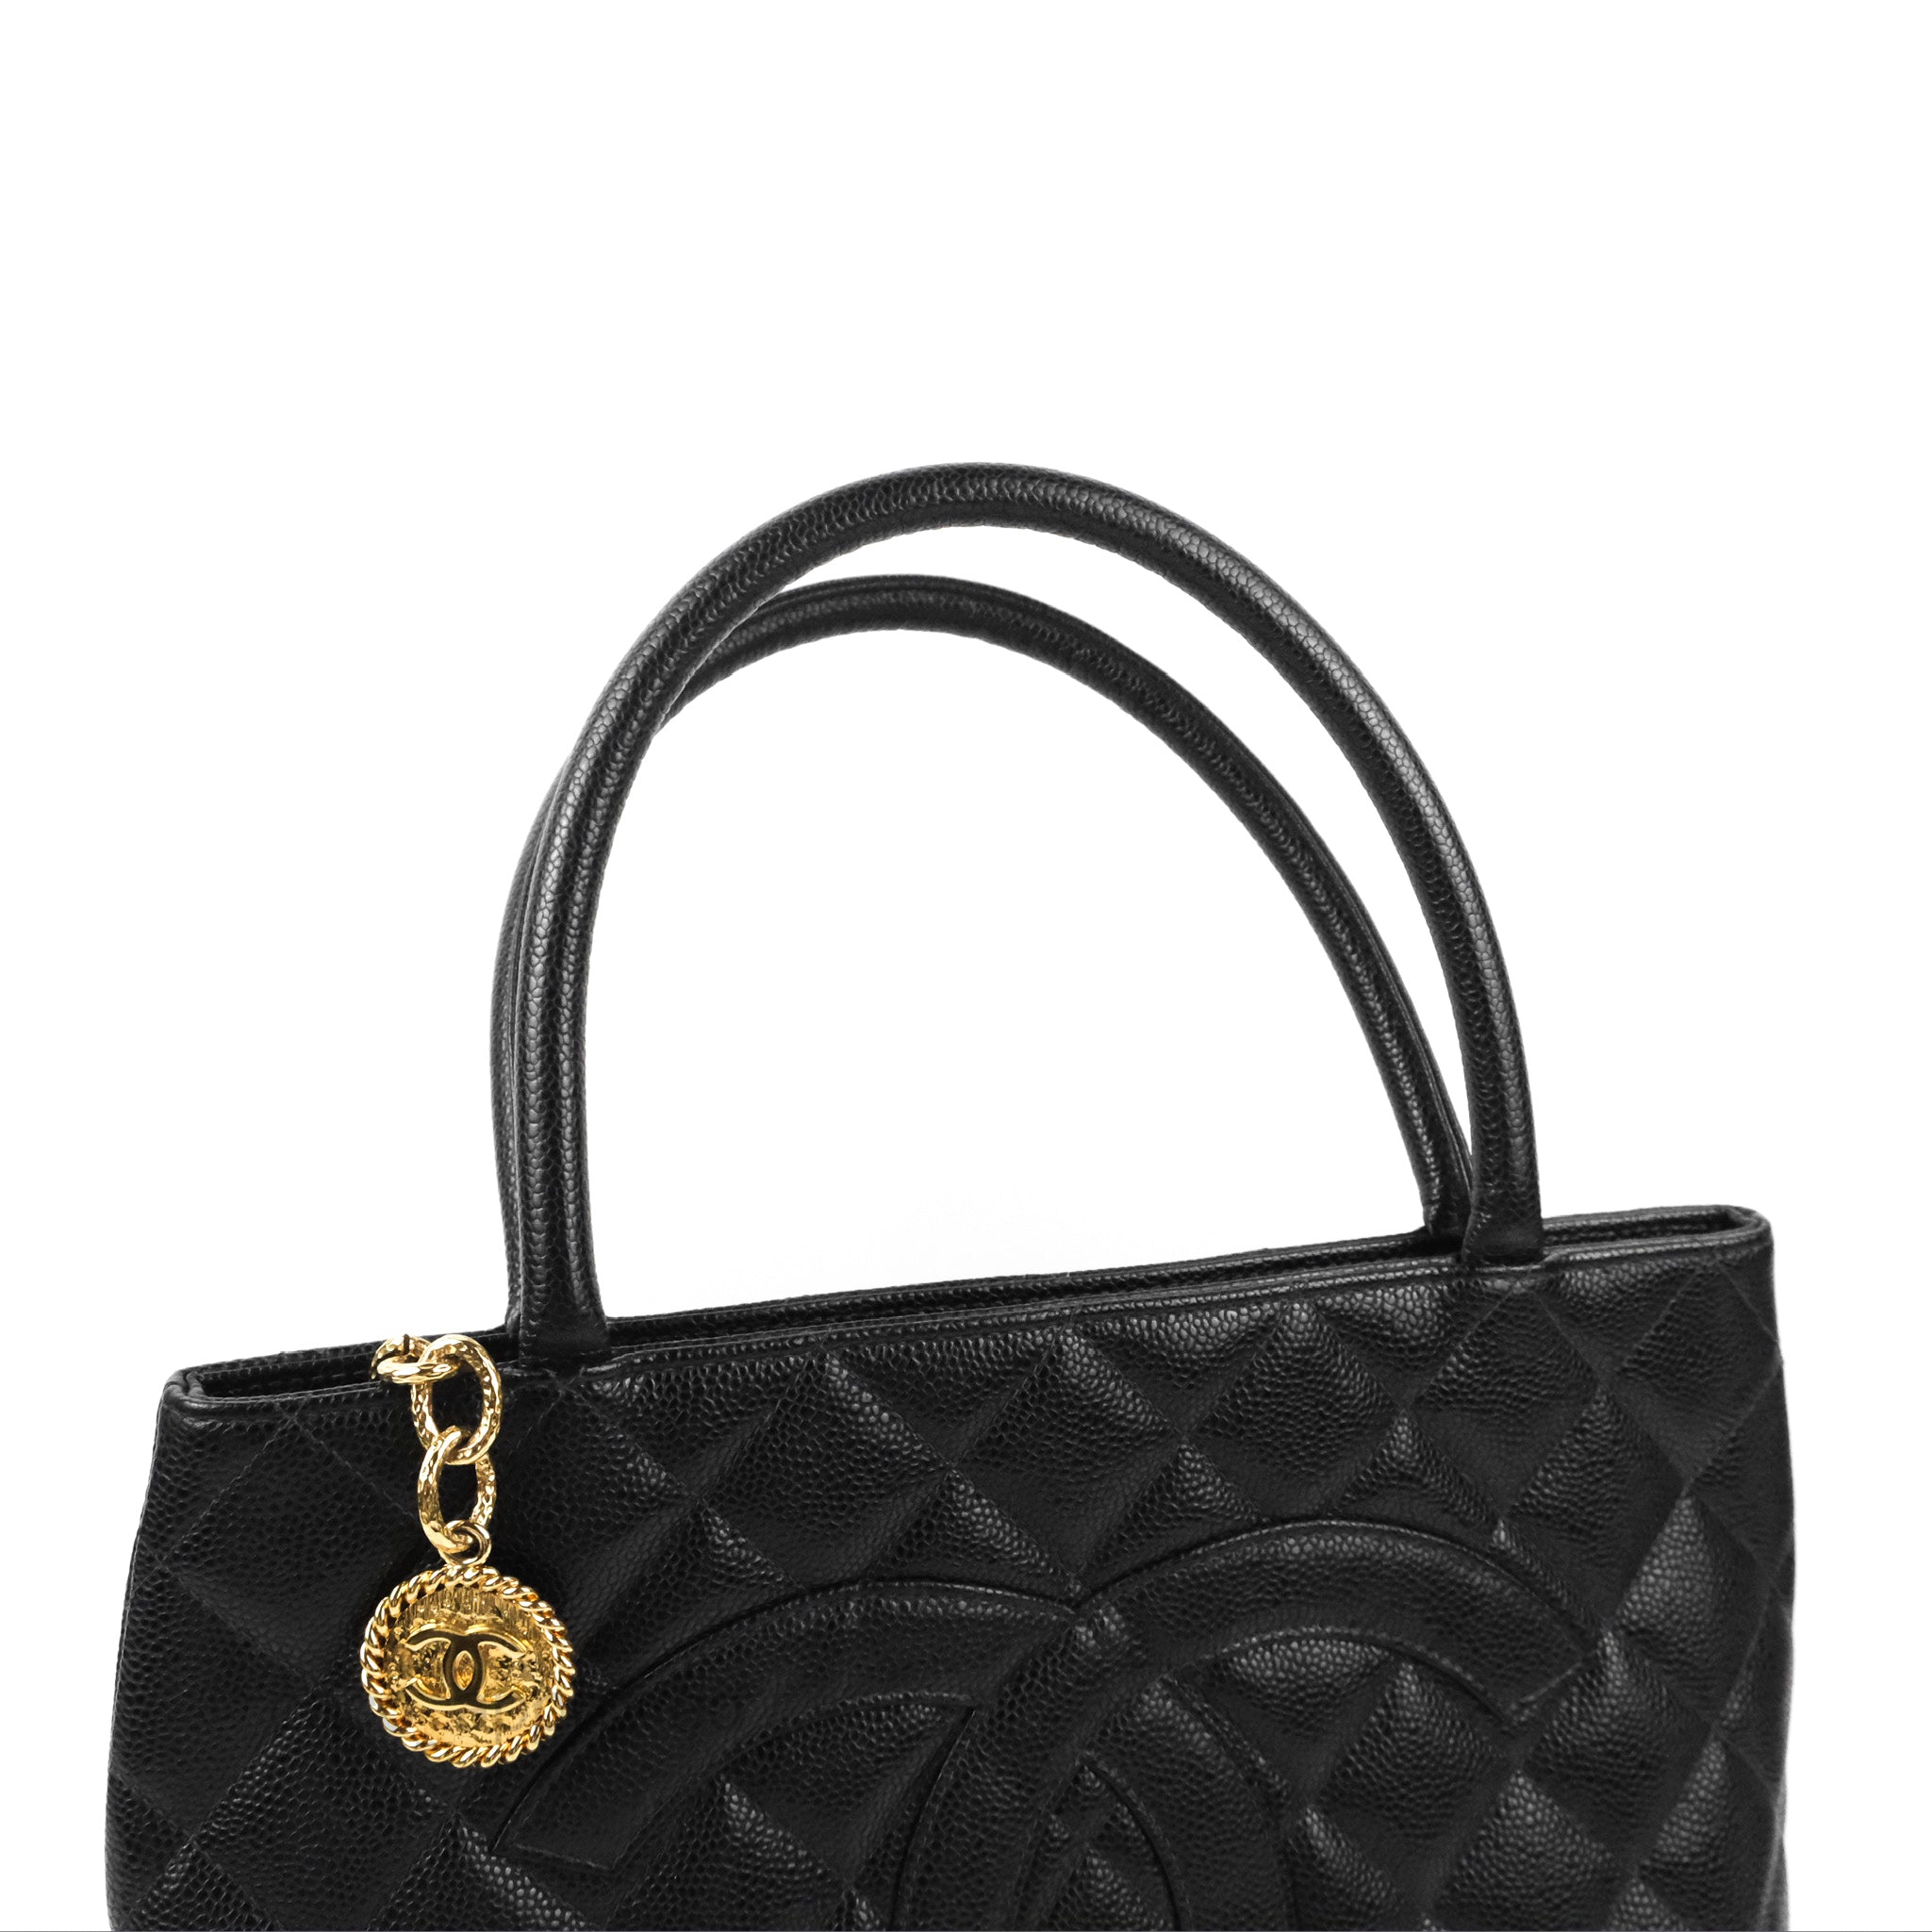 Chanel Vintage - Caviar Medallion Tote Bag - Black - Caviar Leather Handbag  - Luxury High Quality